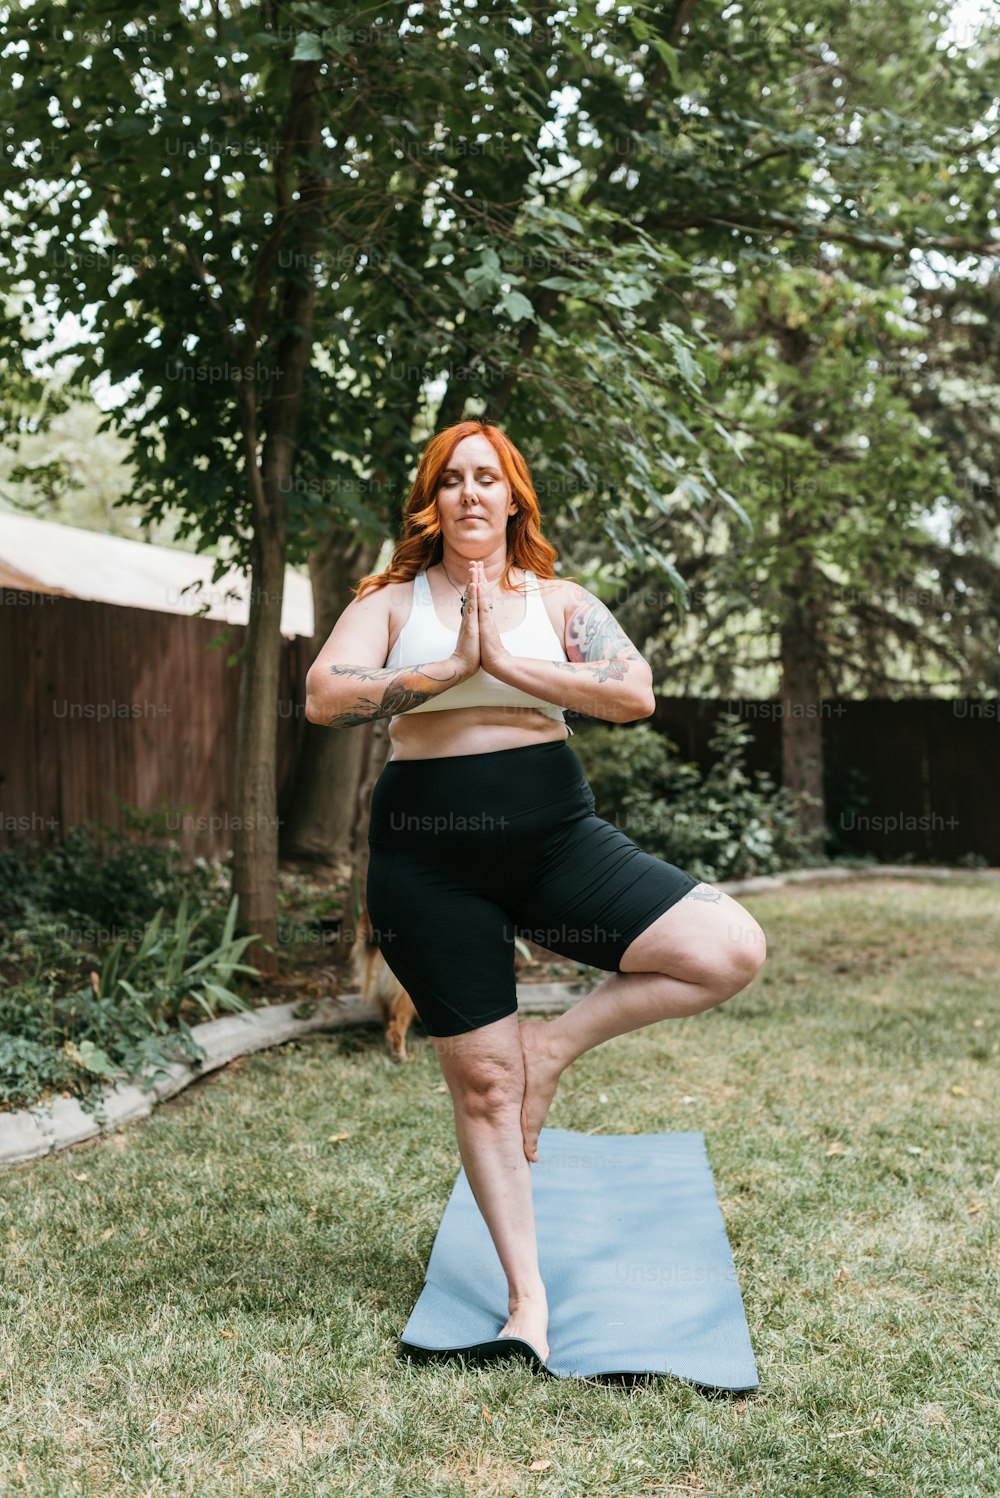 Eine Frau in Yoga-Pose auf einer Yogamatte